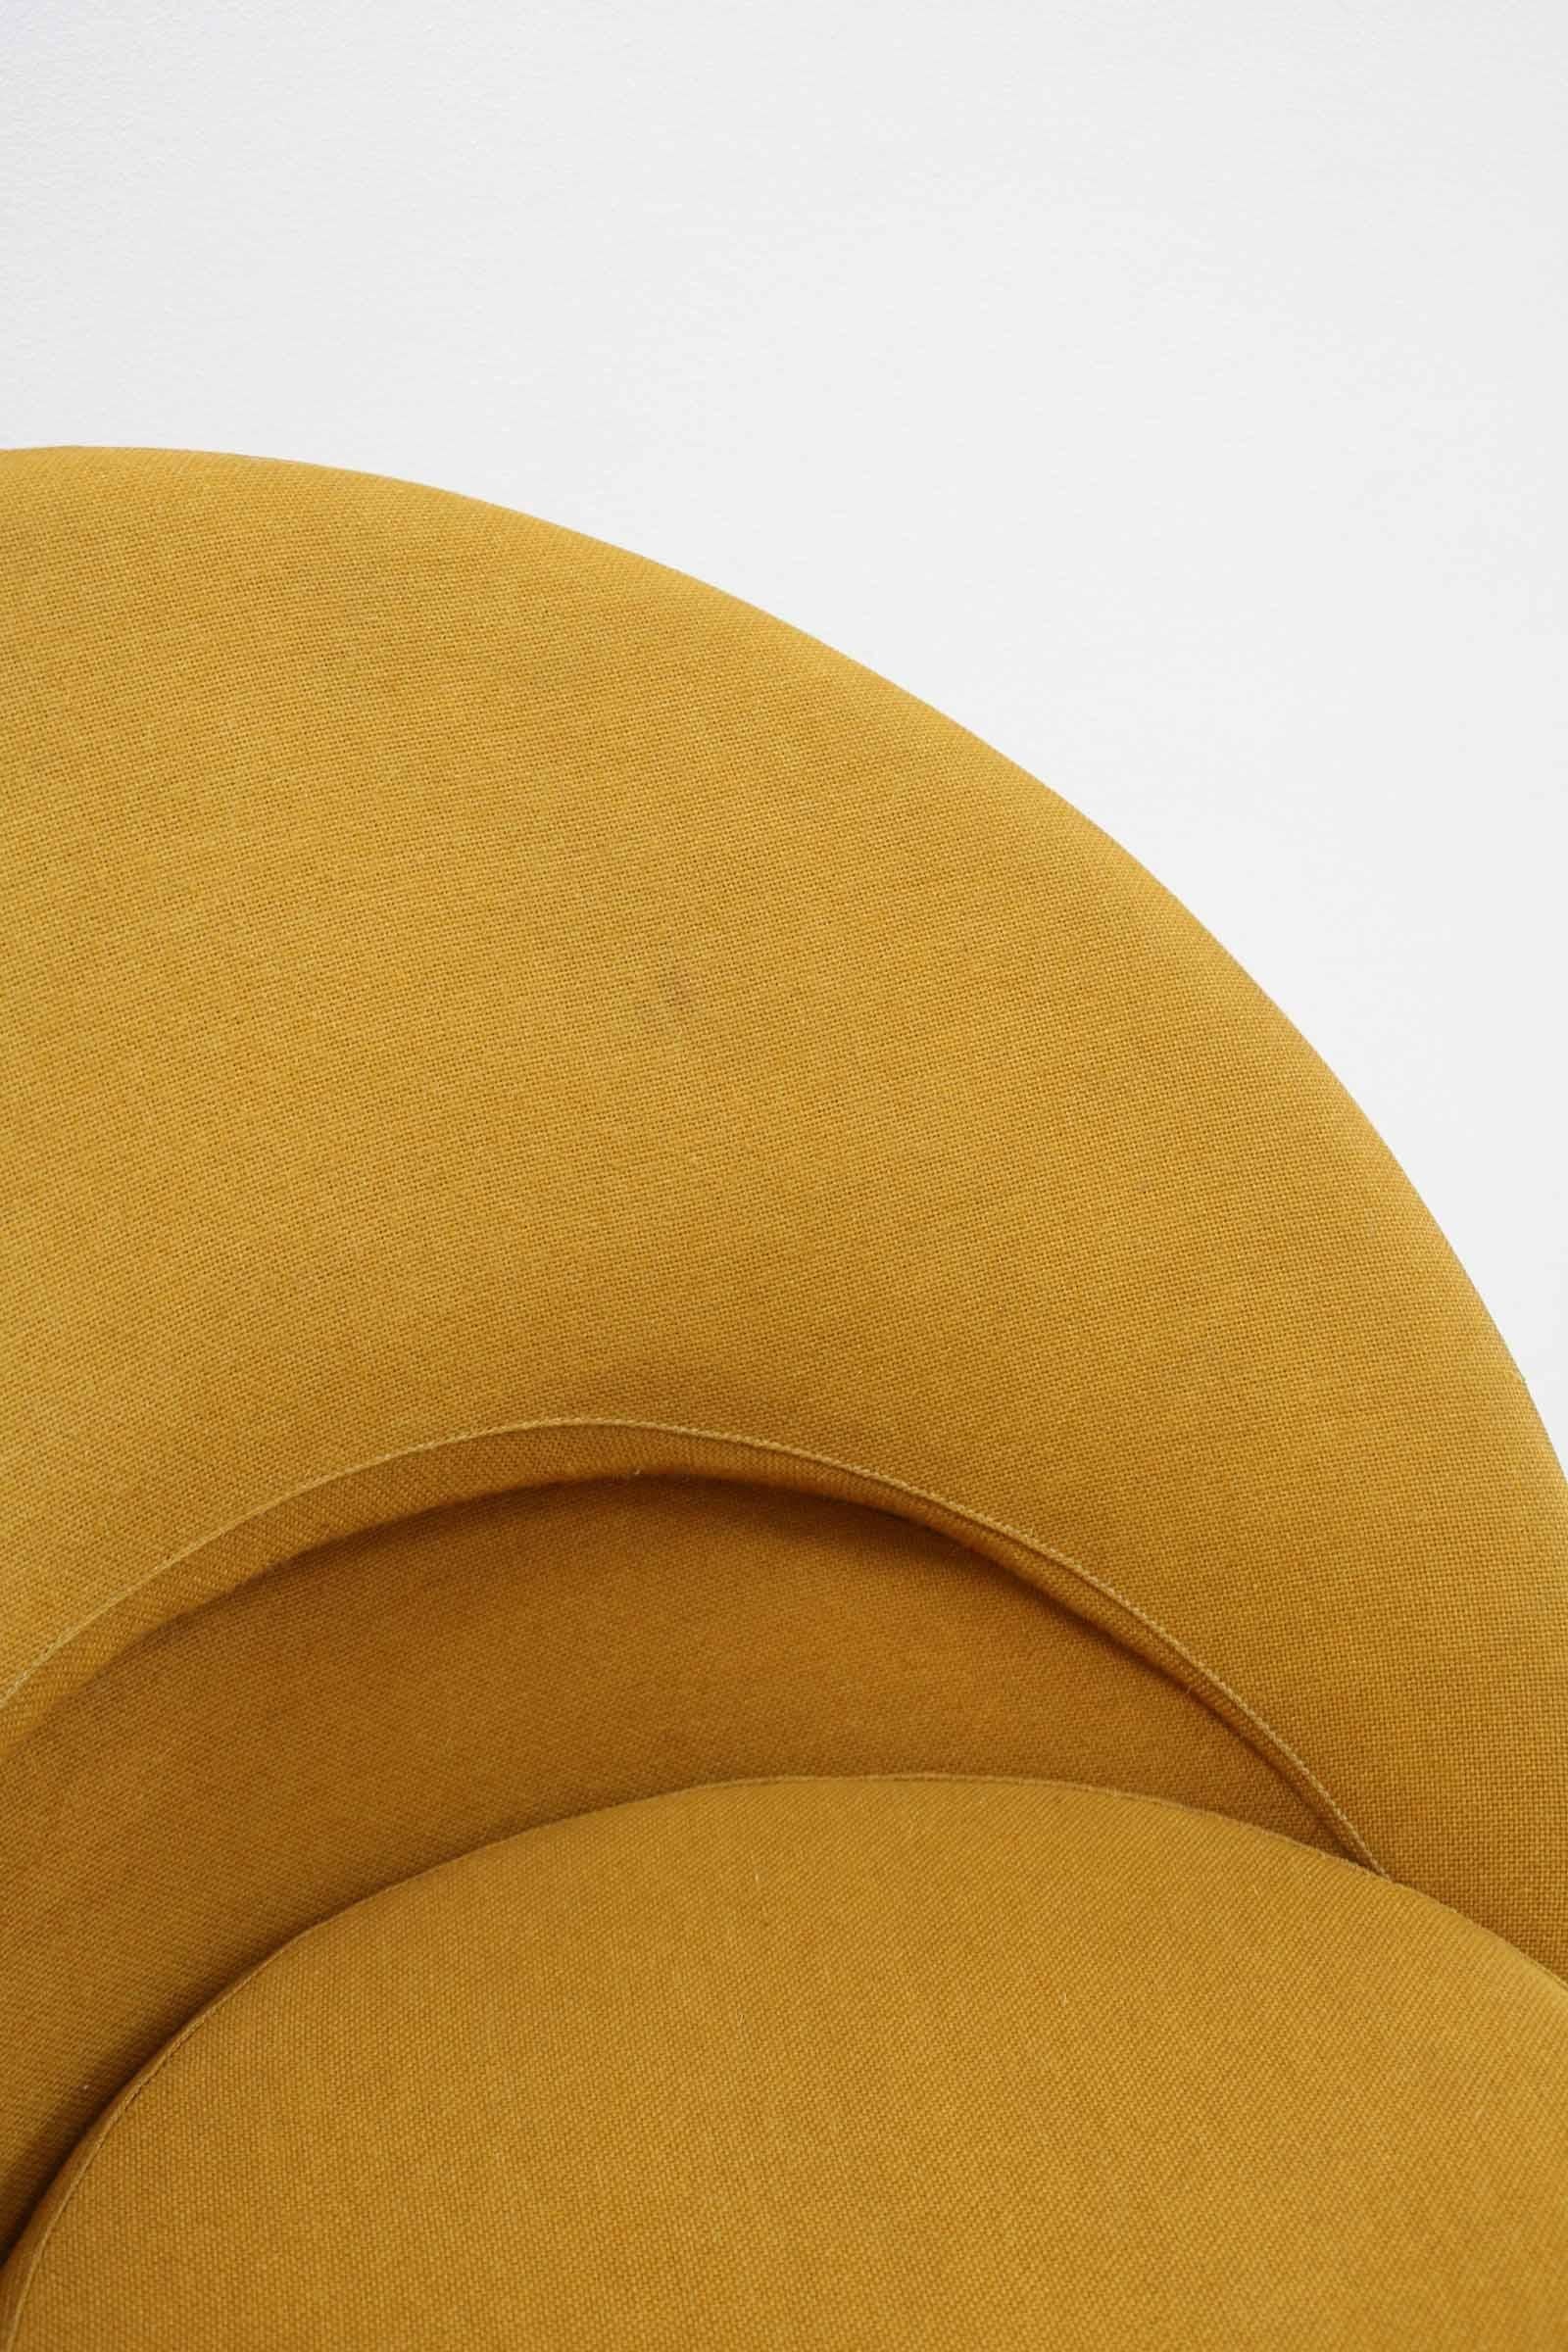 Verner Panton Mustard Yellow Cone Chair in Original Fabric, Denmark, 1960s For Sale 1